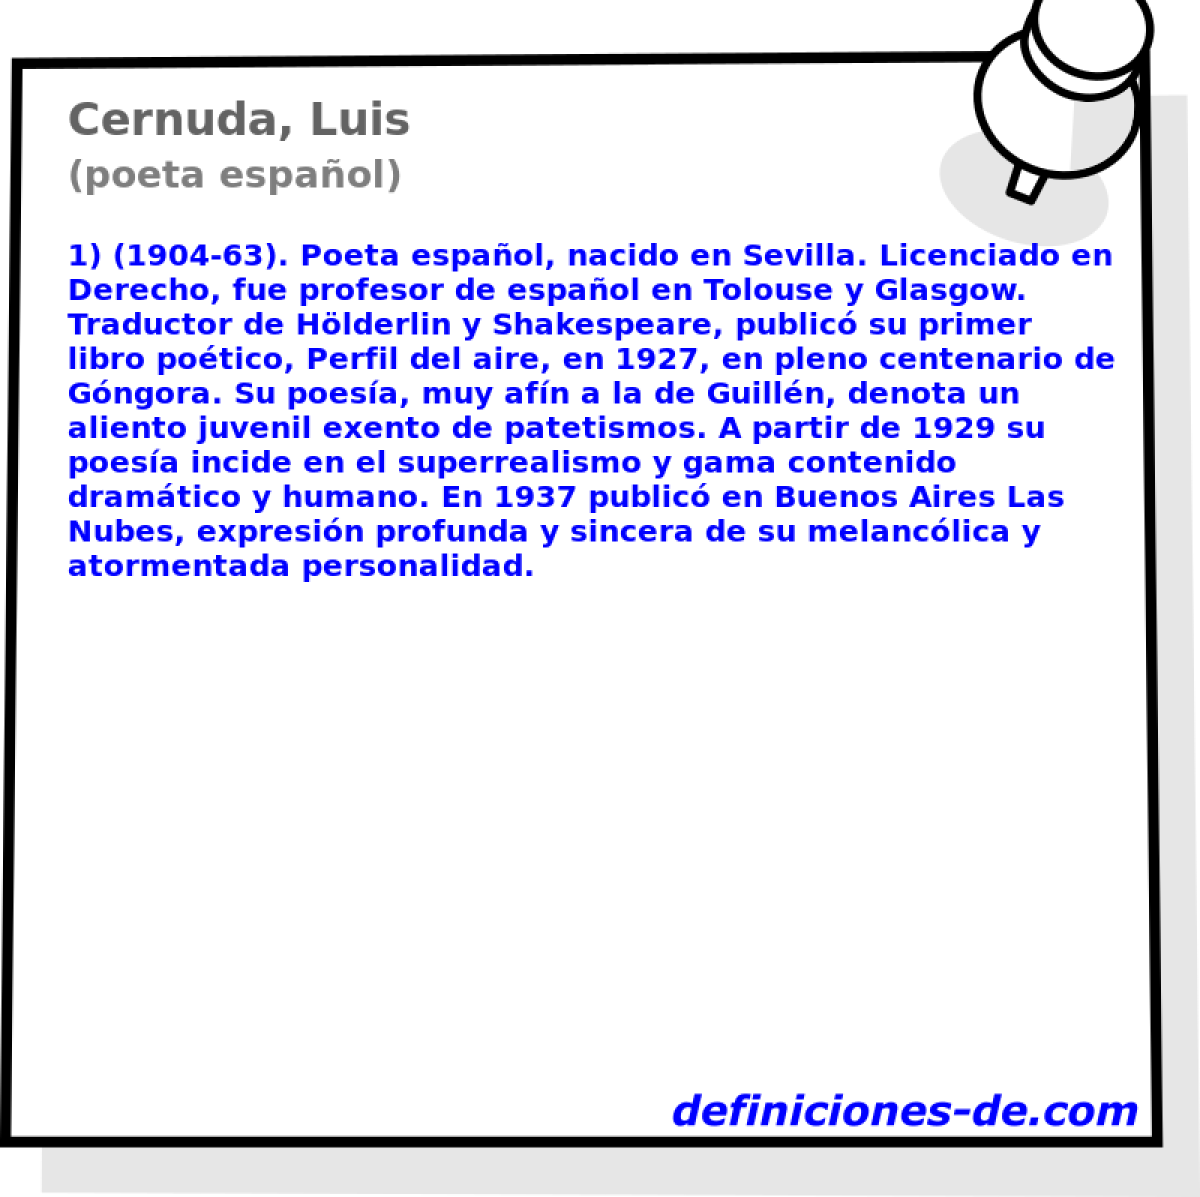 Cernuda, Luis (poeta espaol)